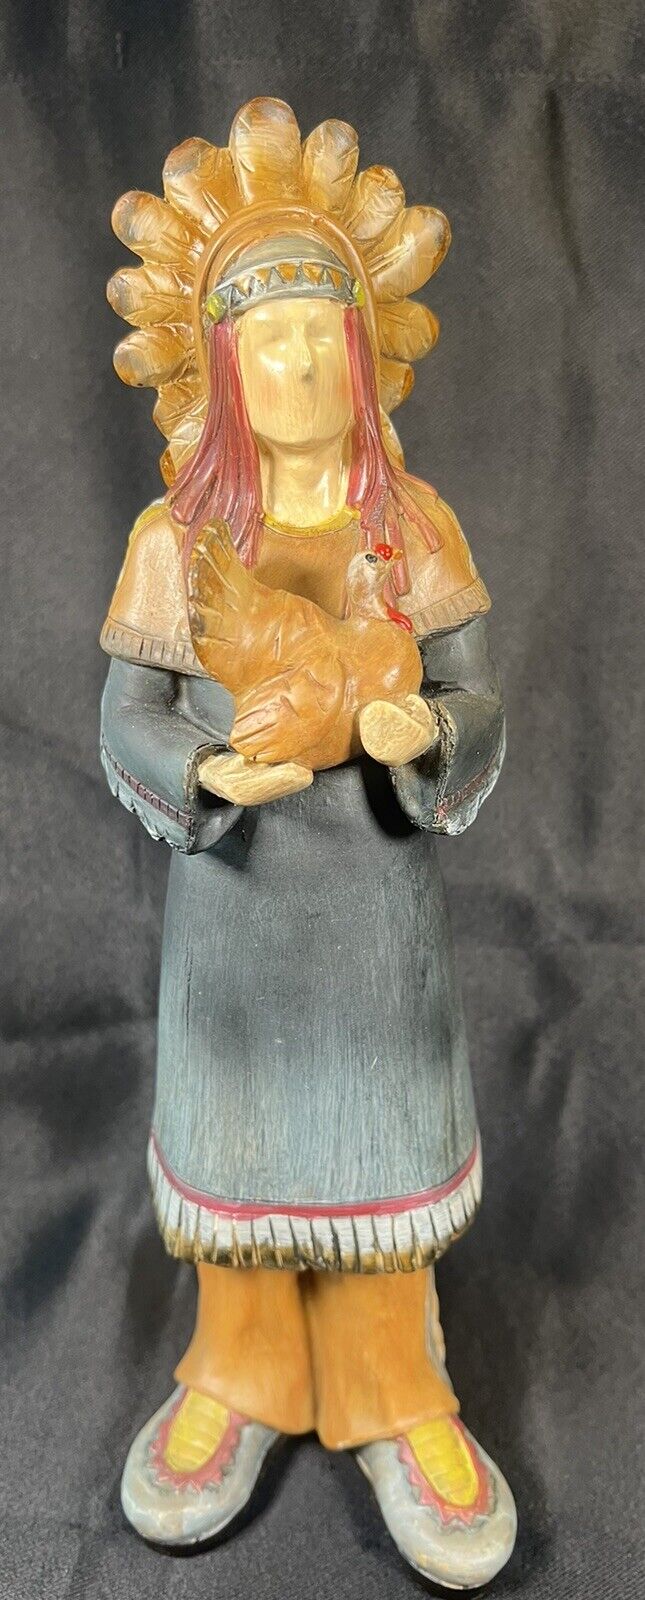 Pacific Rim Native American Indian Resin Figurine Statue Thanksgiving 12” MAN